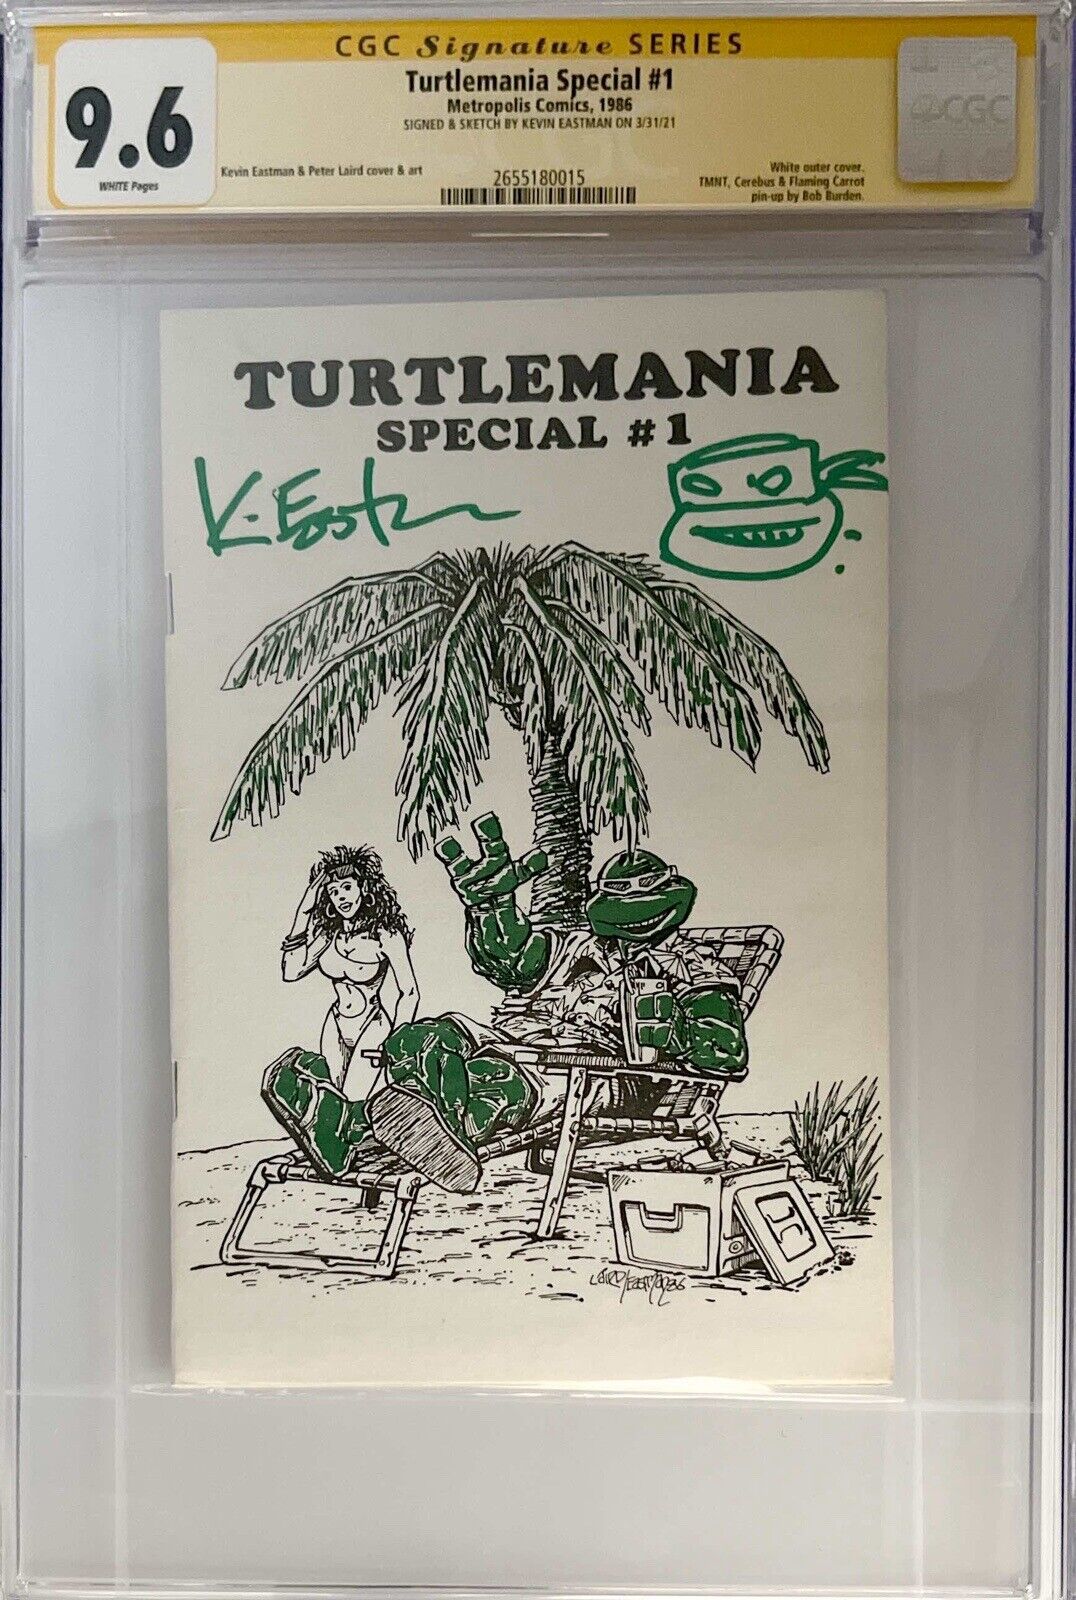 🔥 RARE🔥 Metropolis Comics Turtlemania Special #1, 1986 CGG 9.6